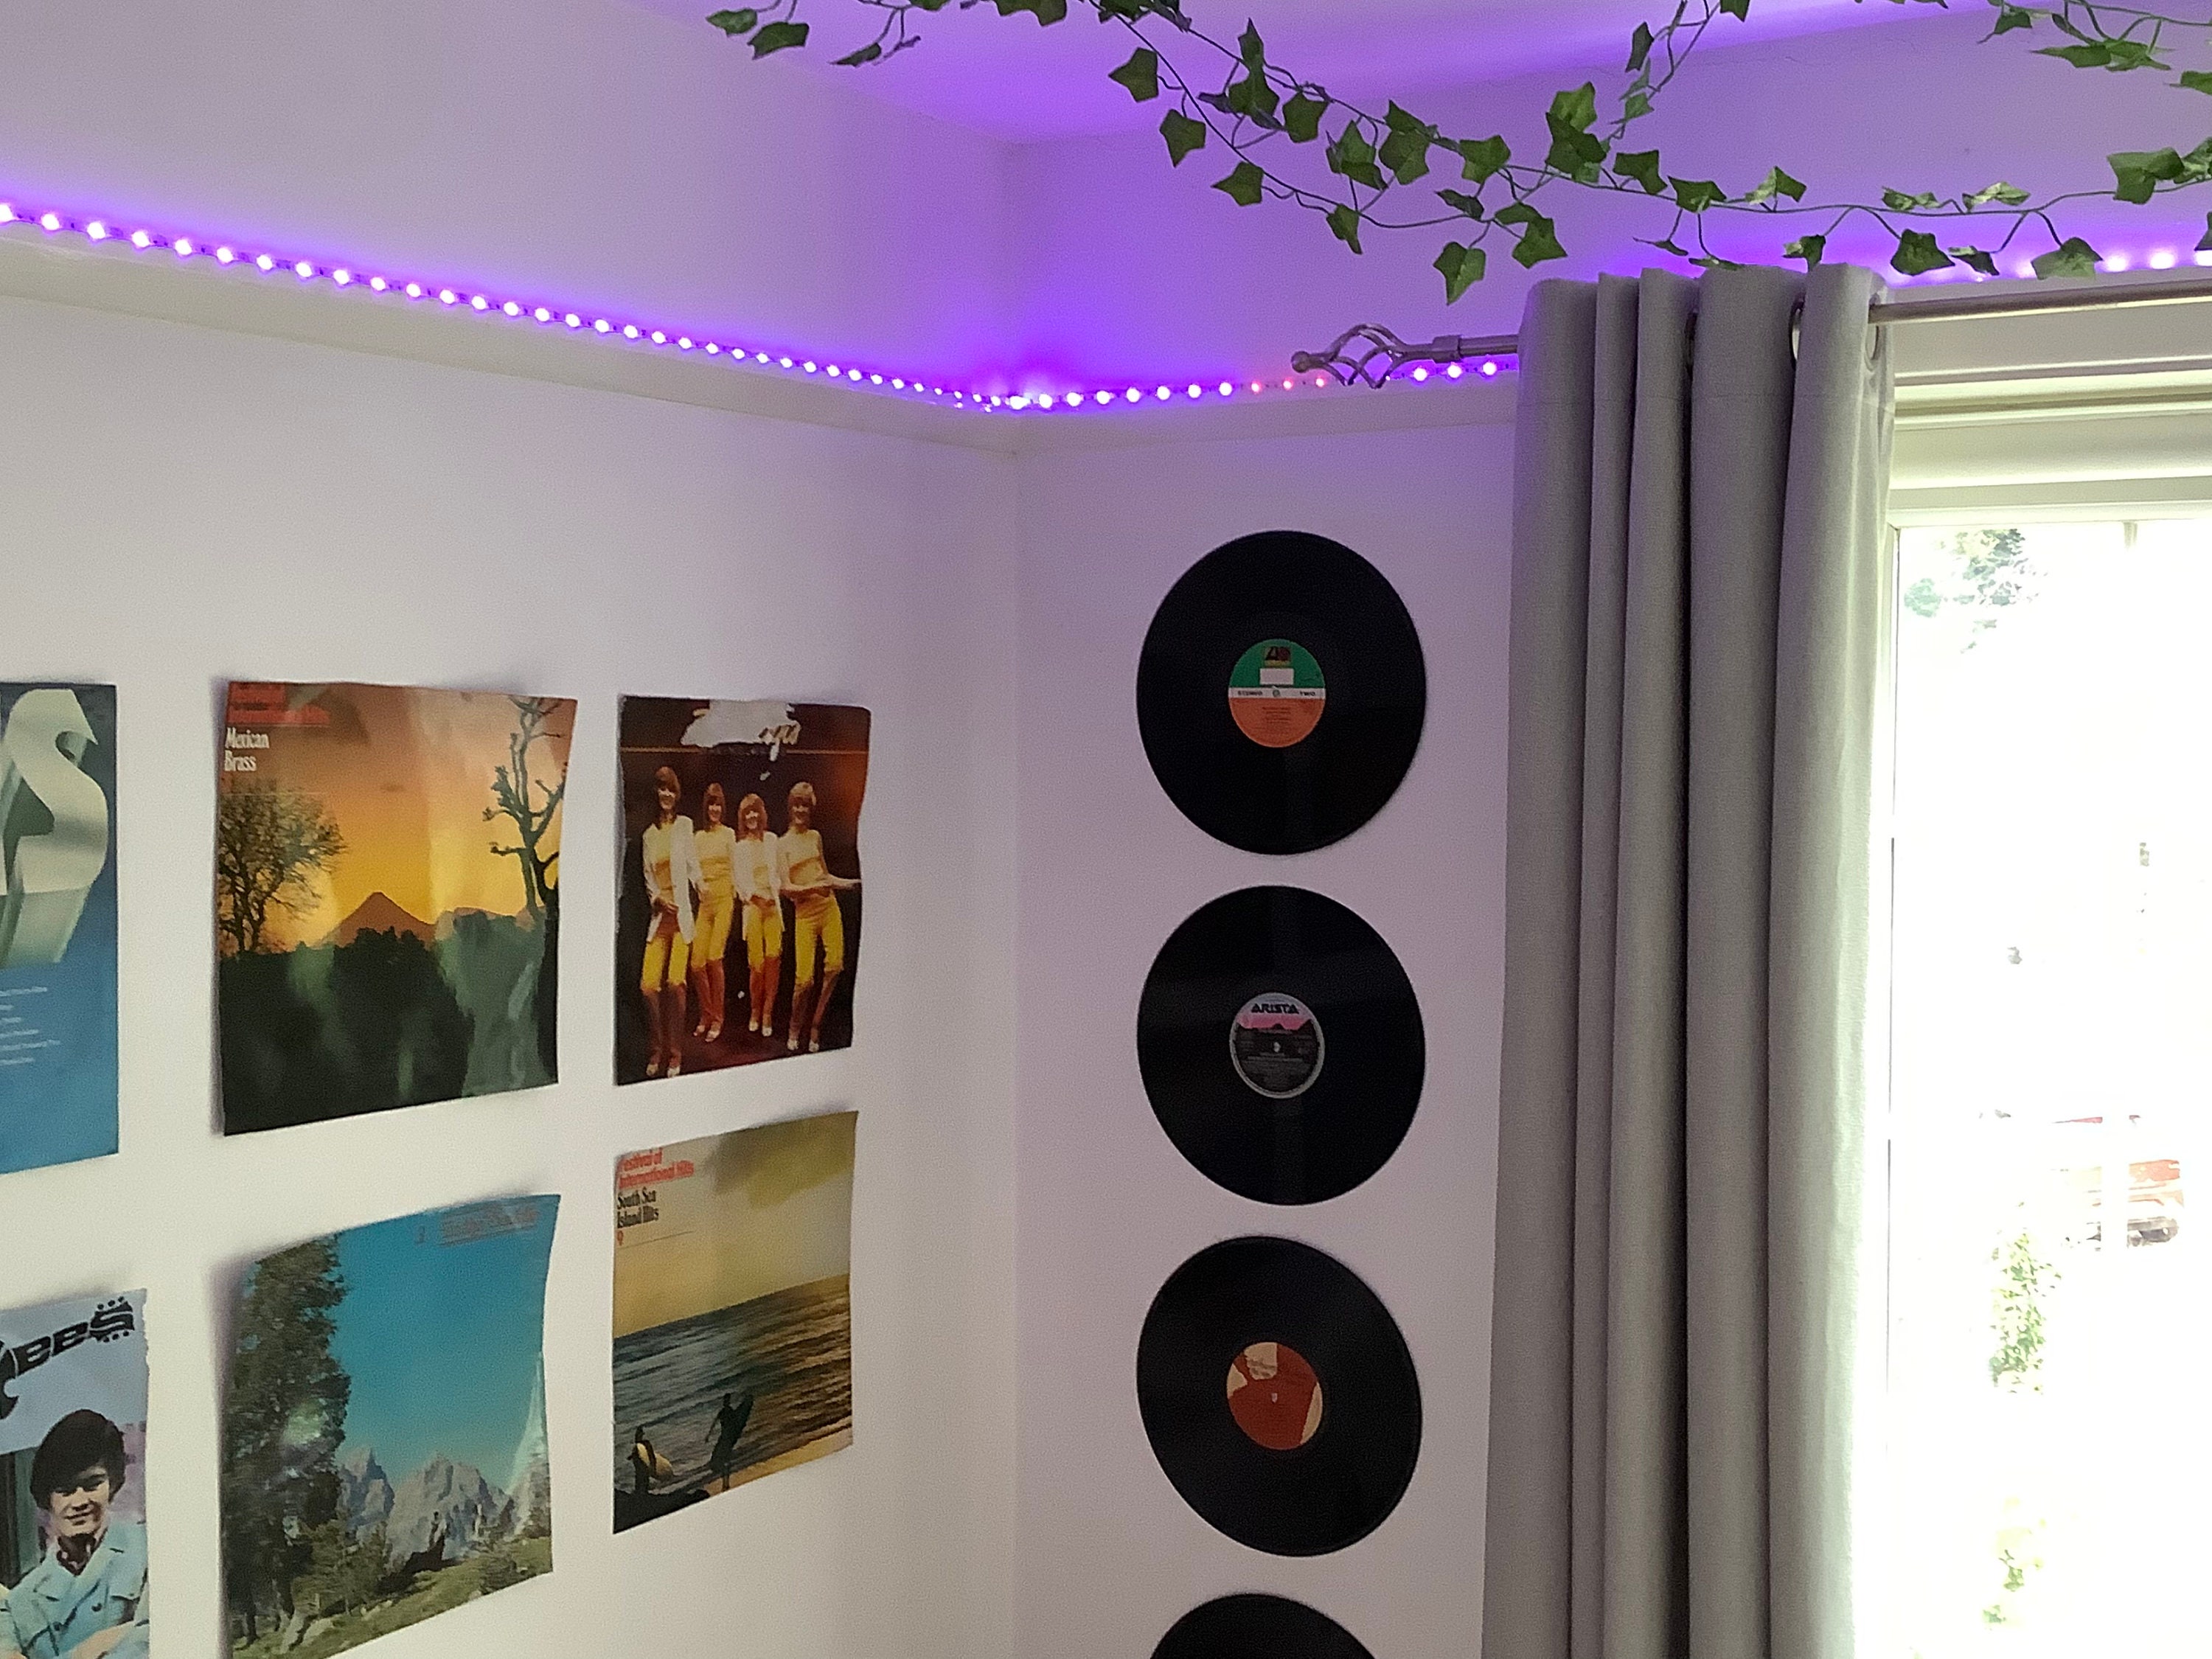 Grunge Room Decor - Aesthetic Room Decor